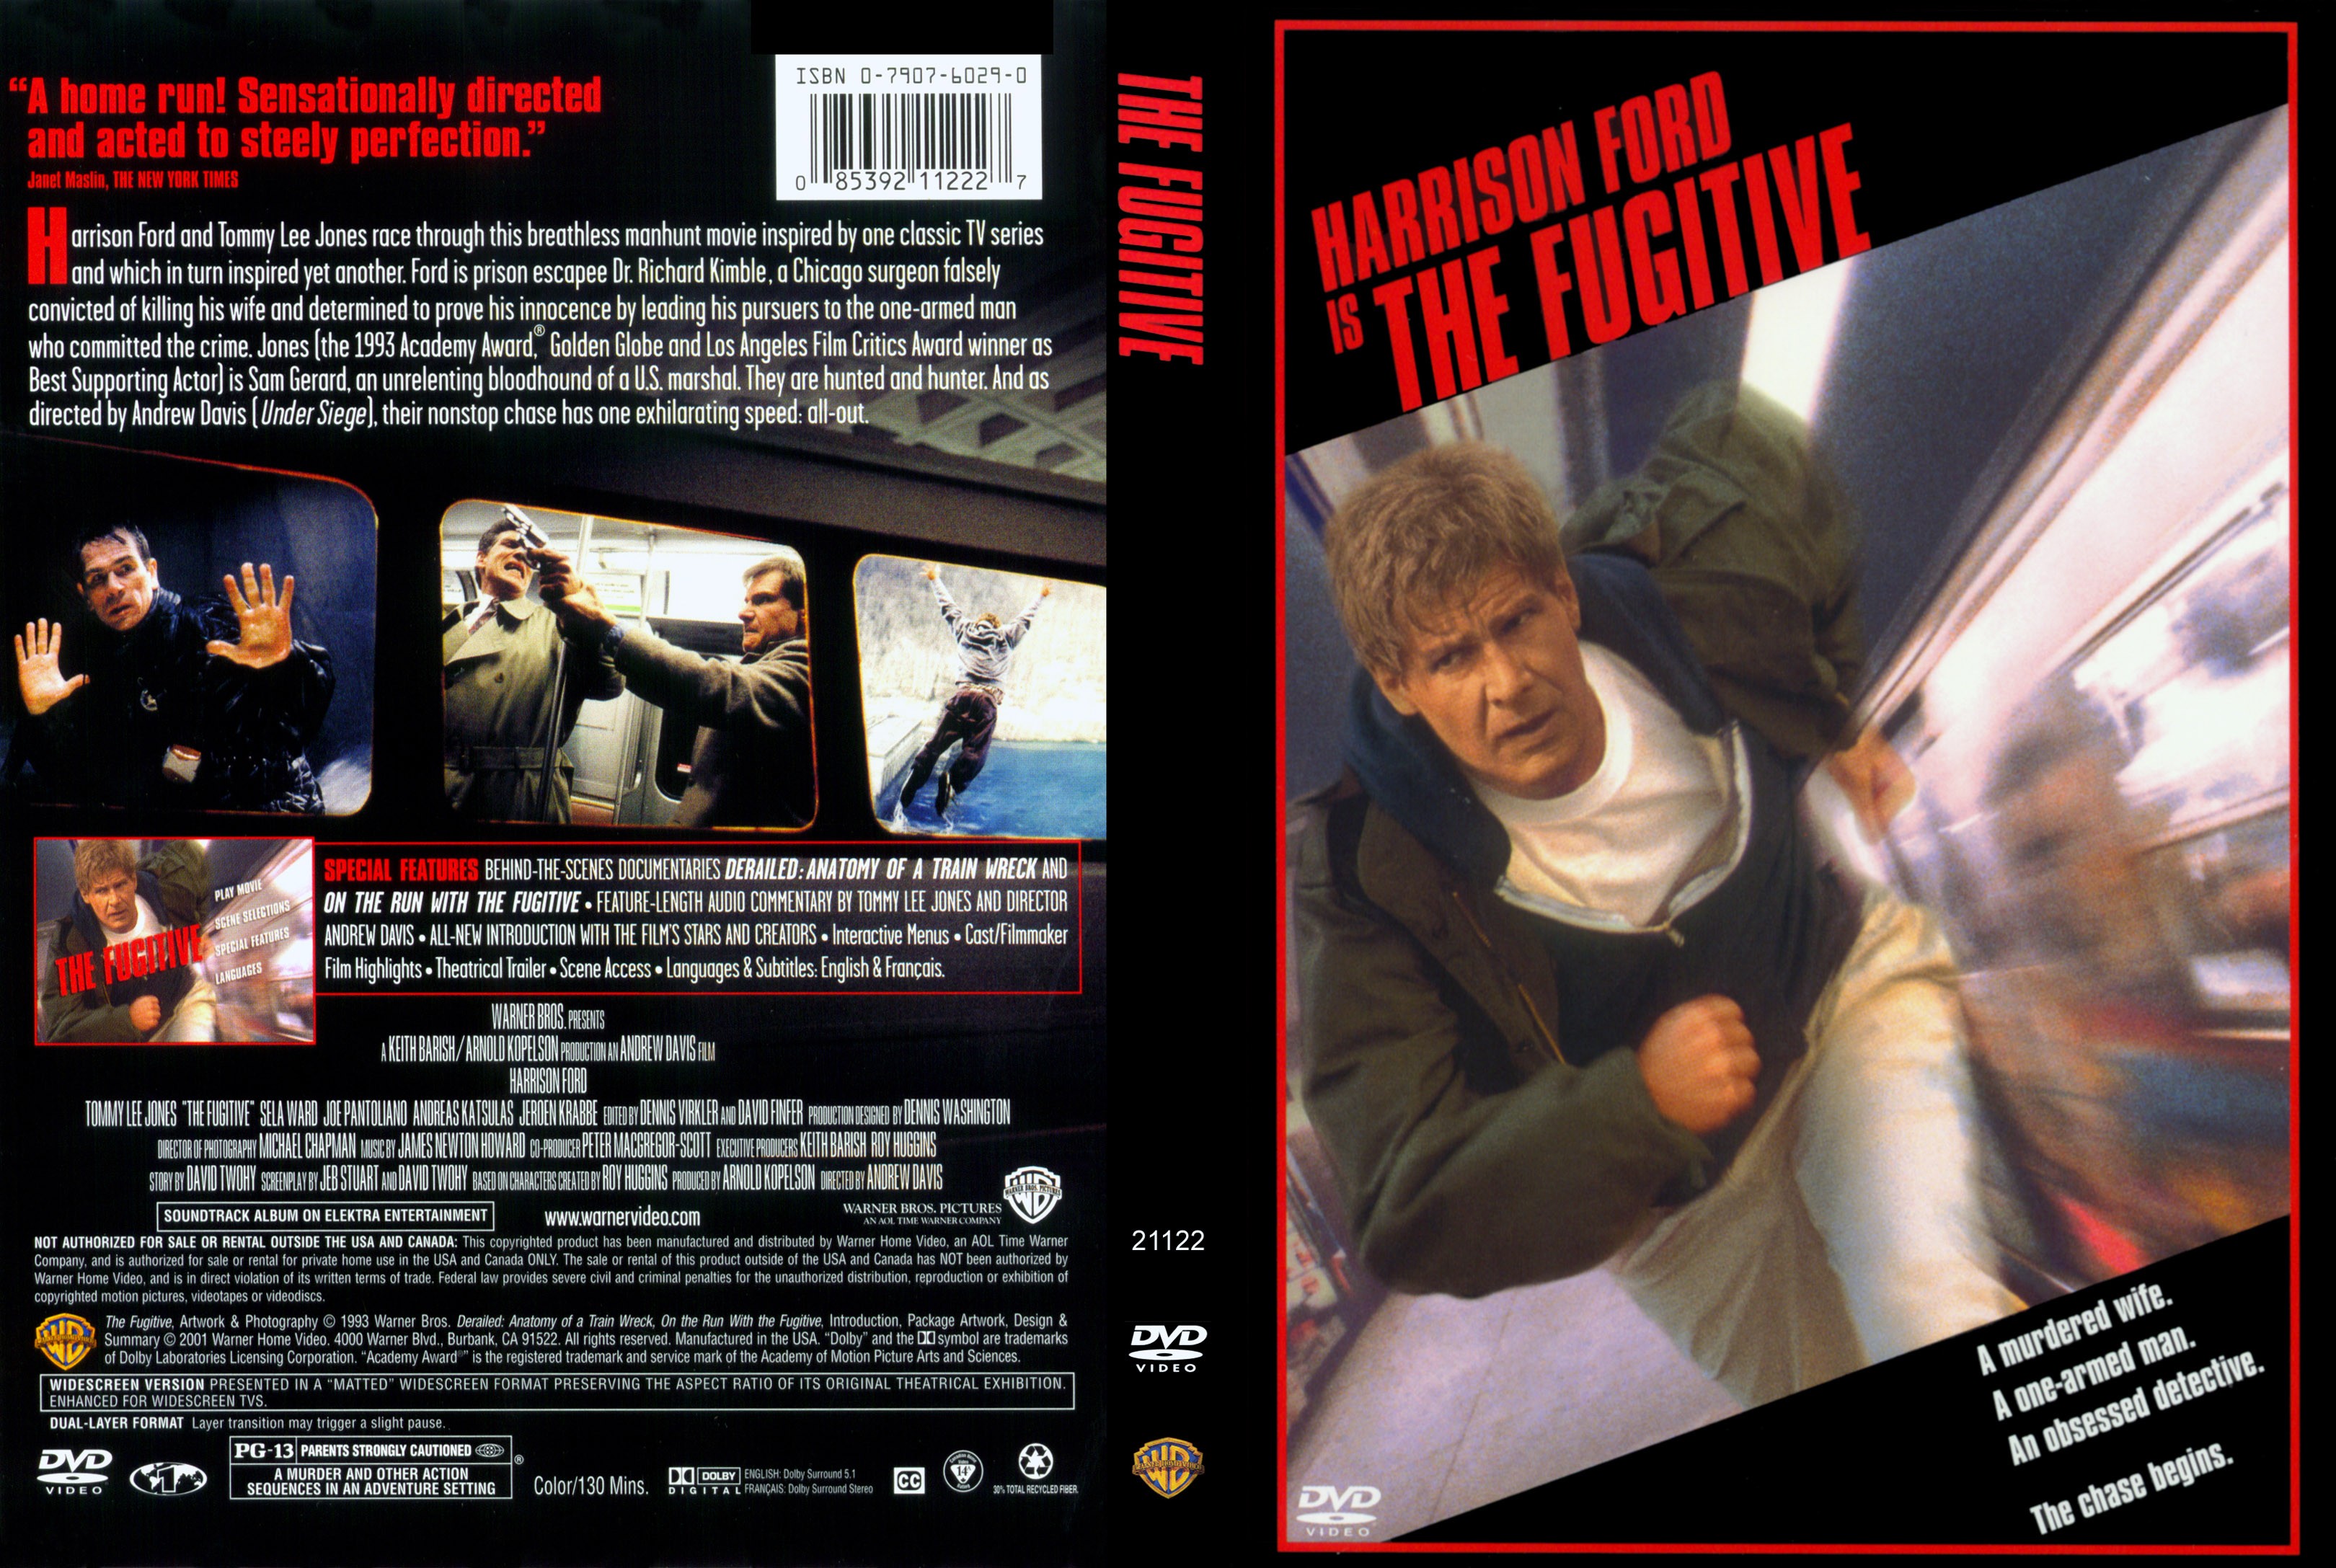 Jaquette DVD The Fugitive - Le fugitif (Canadienne)